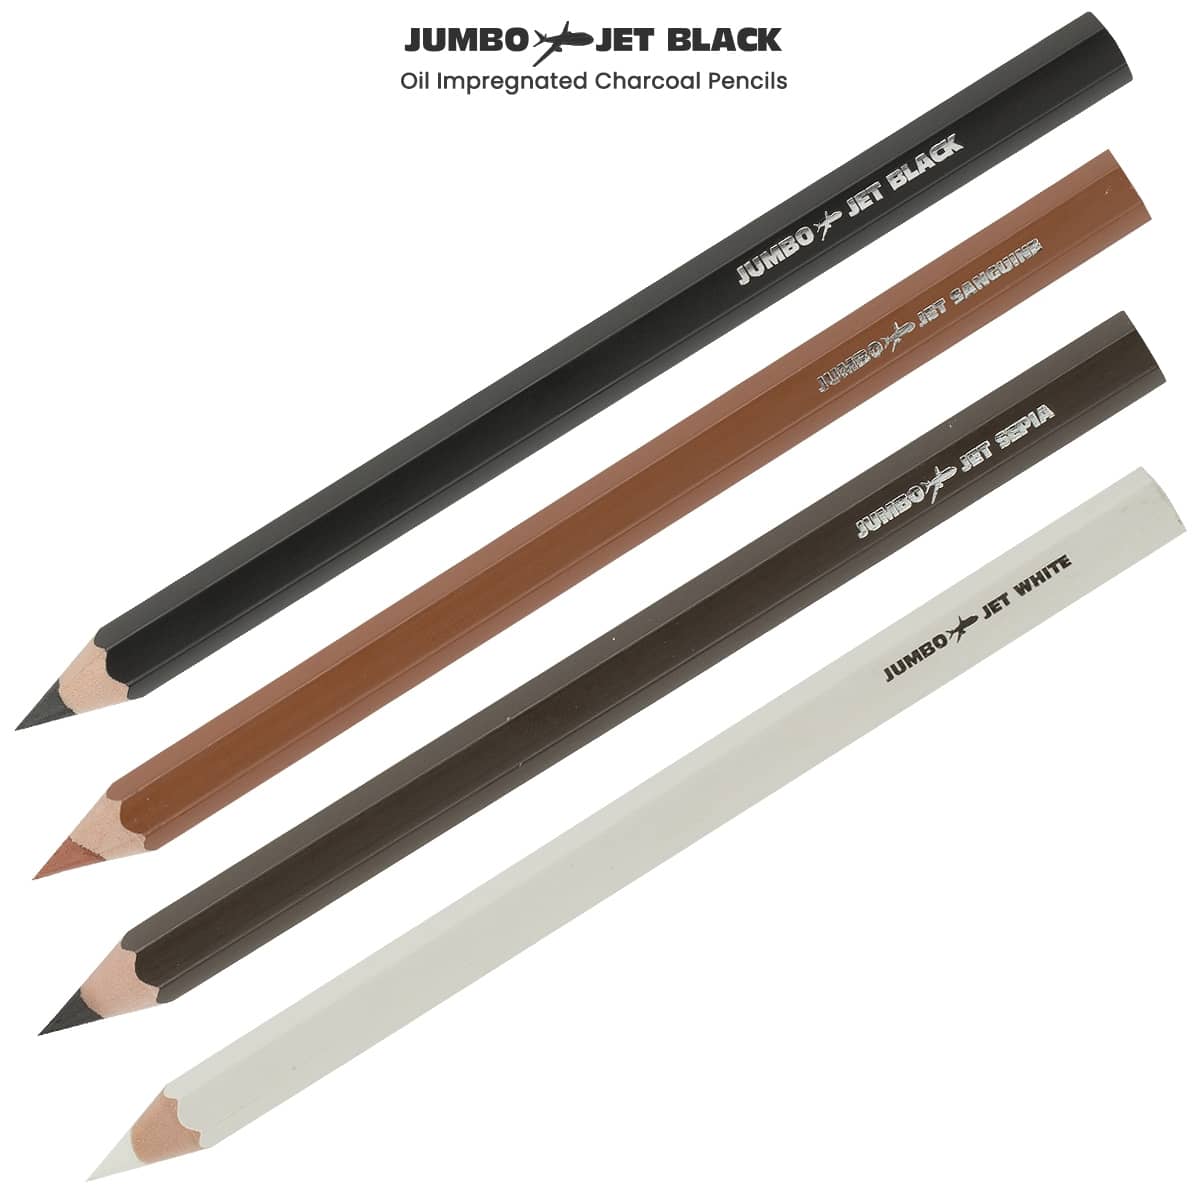 Jumbo Jet Oil Impregnated Charcoal Pencils set of 4